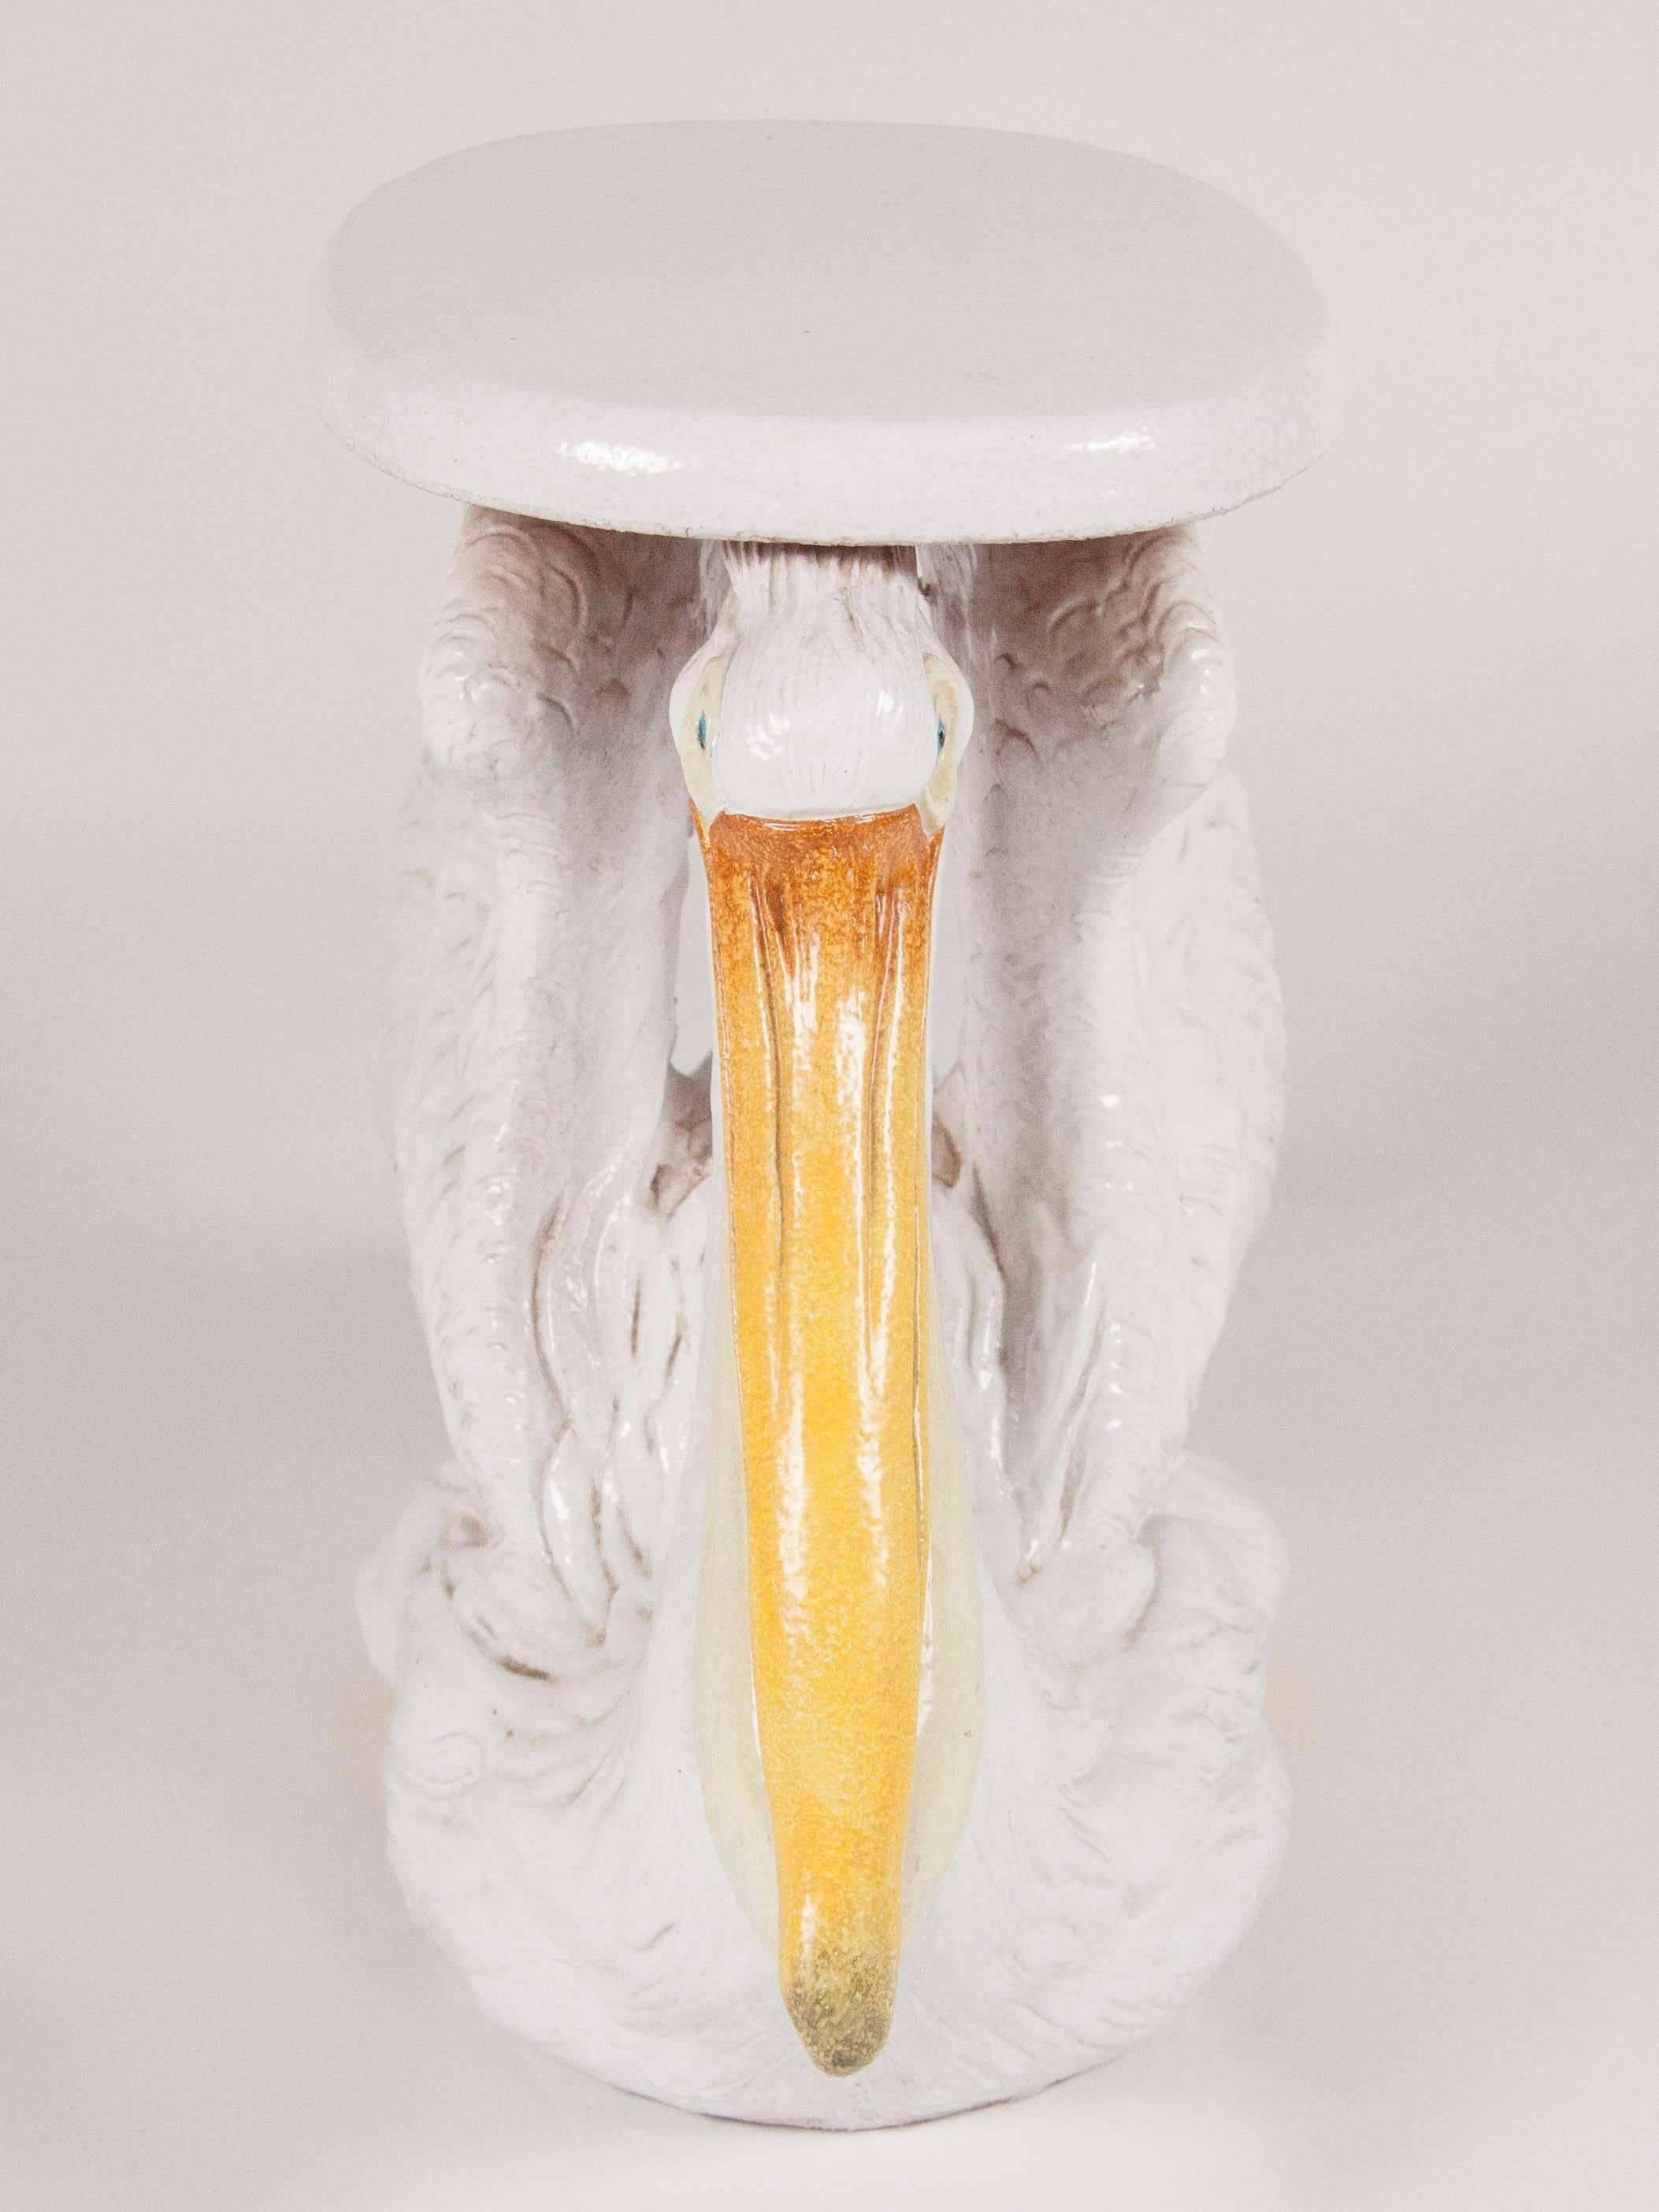 Terracotta Italian Garden Seat in the Form of a Pelican